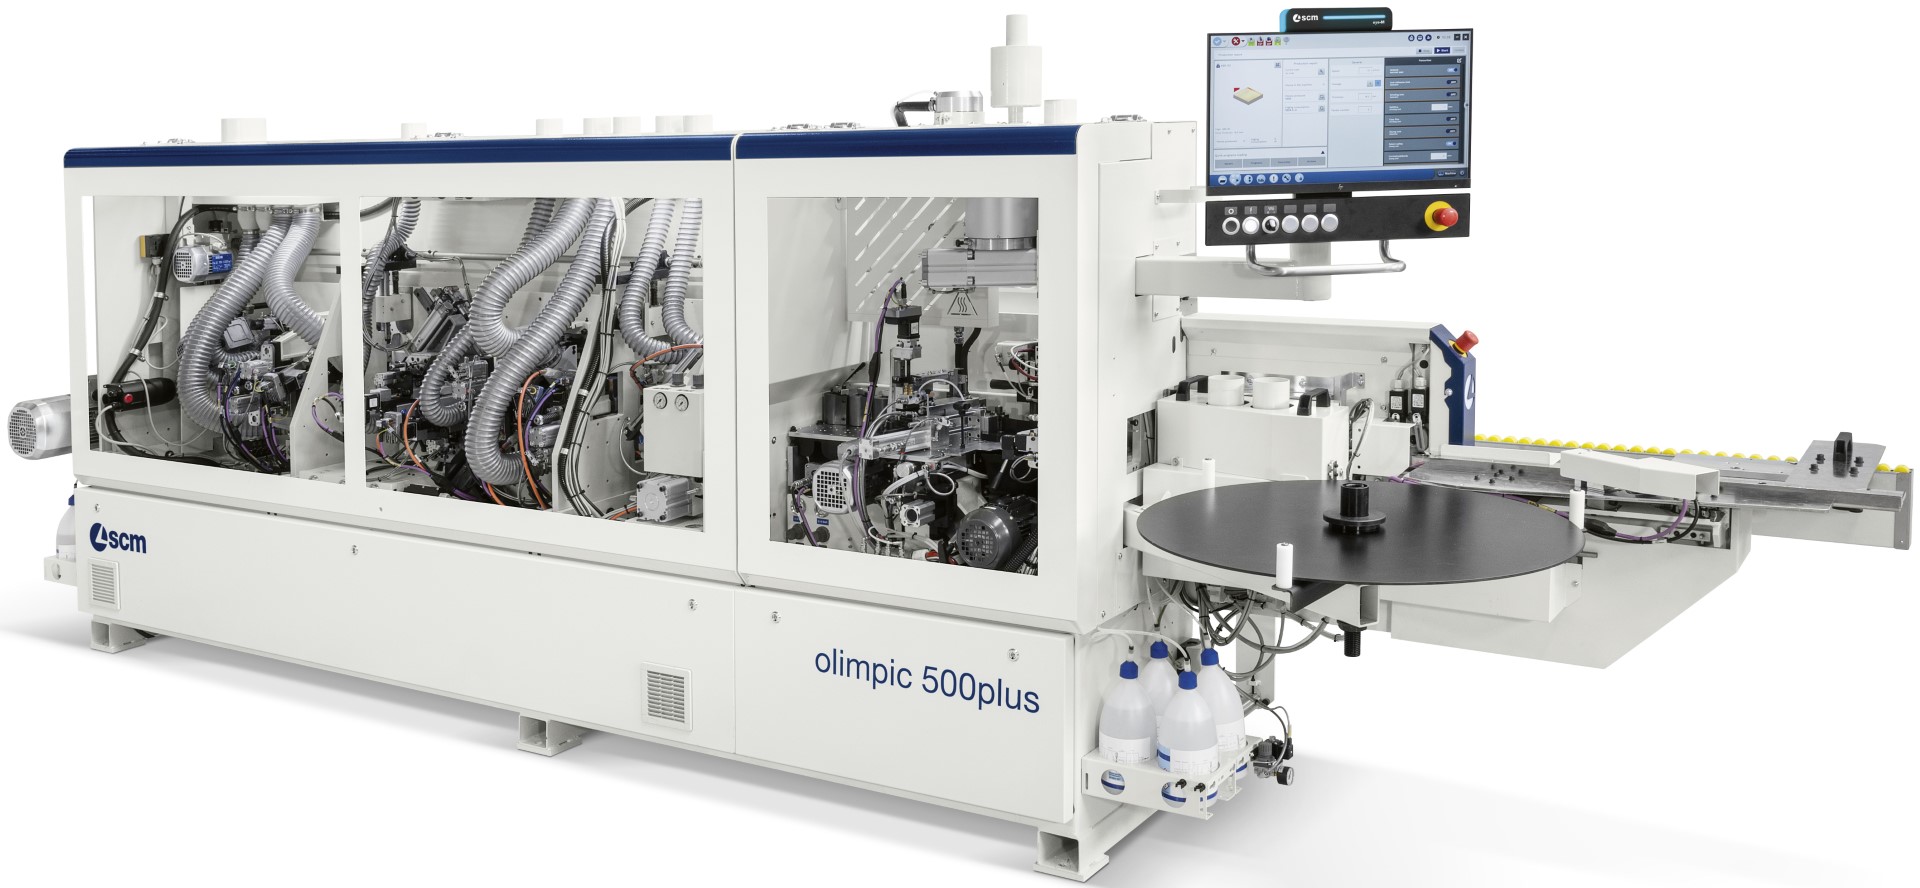 מכונת קנטים SCM olimpic 500plus